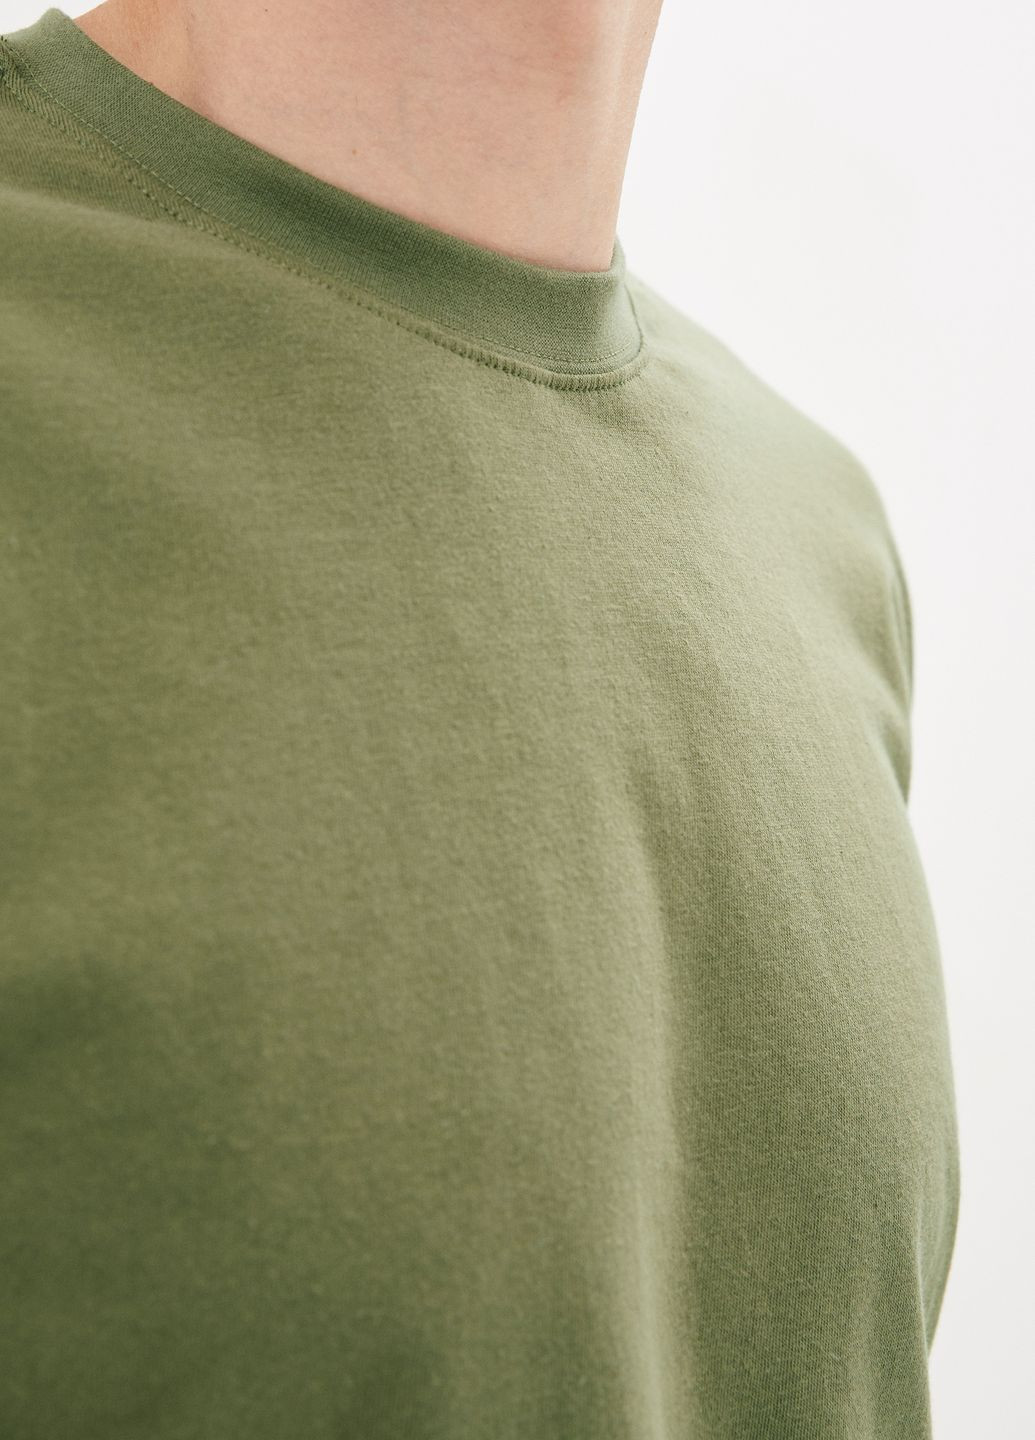 Хаки (оливковая) футболка базовая мужская с коротким рукавом Роза